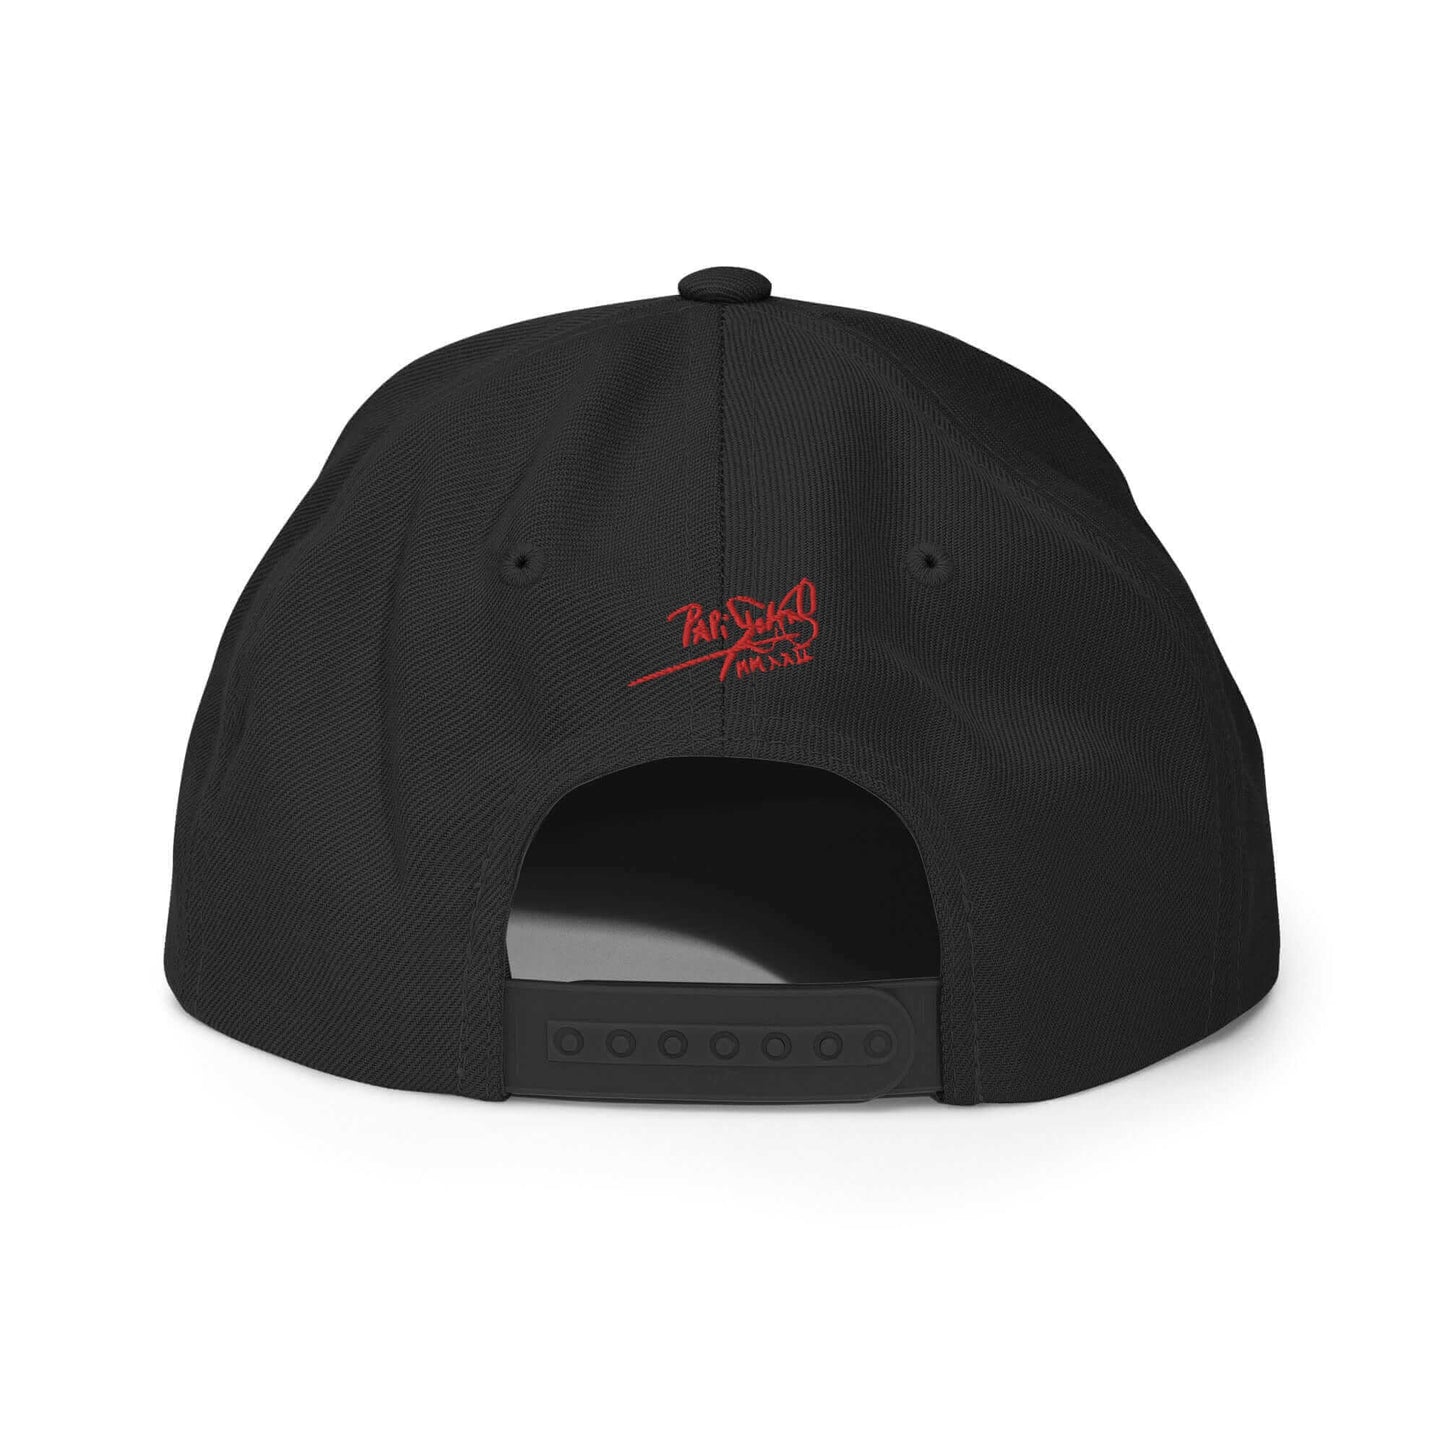 Snapback Hat papijohn firma bordada en rojo negra